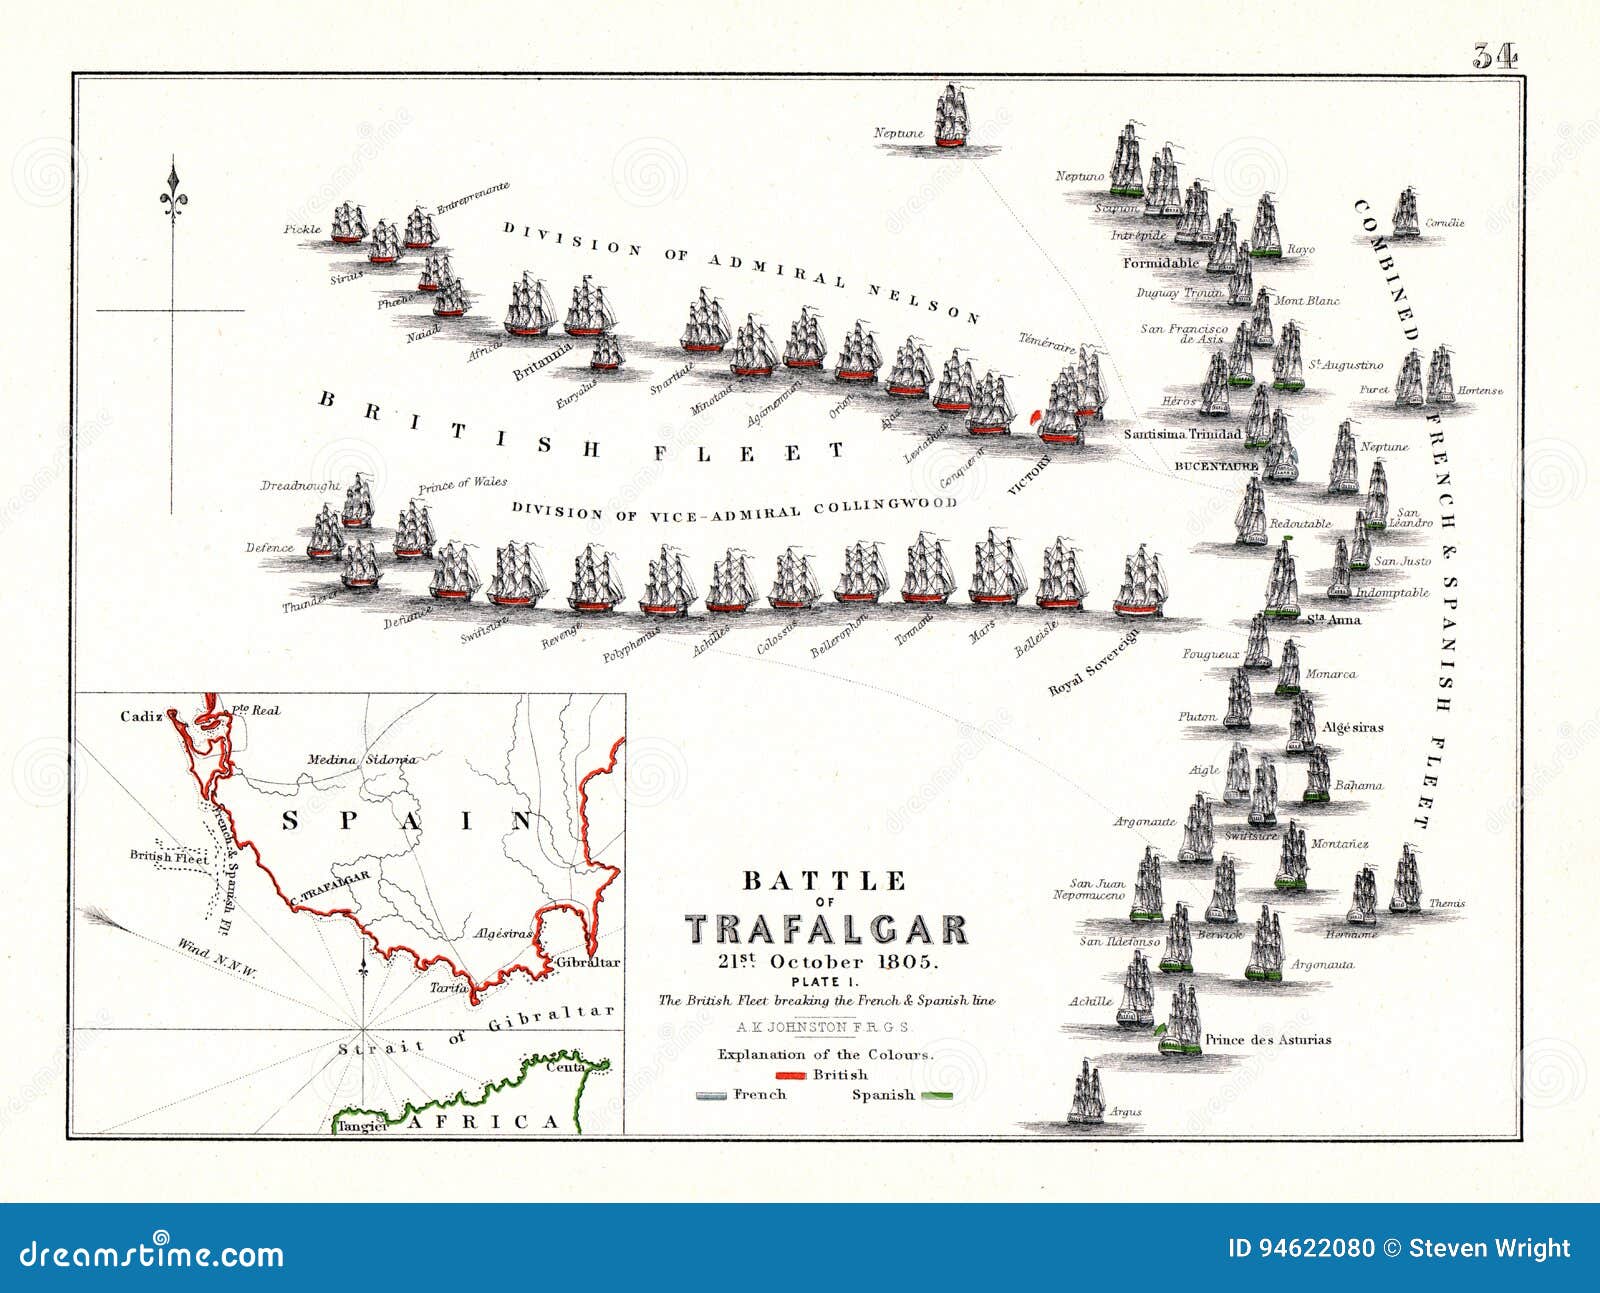 battle of trafalgar early day, oct. 21, 1805